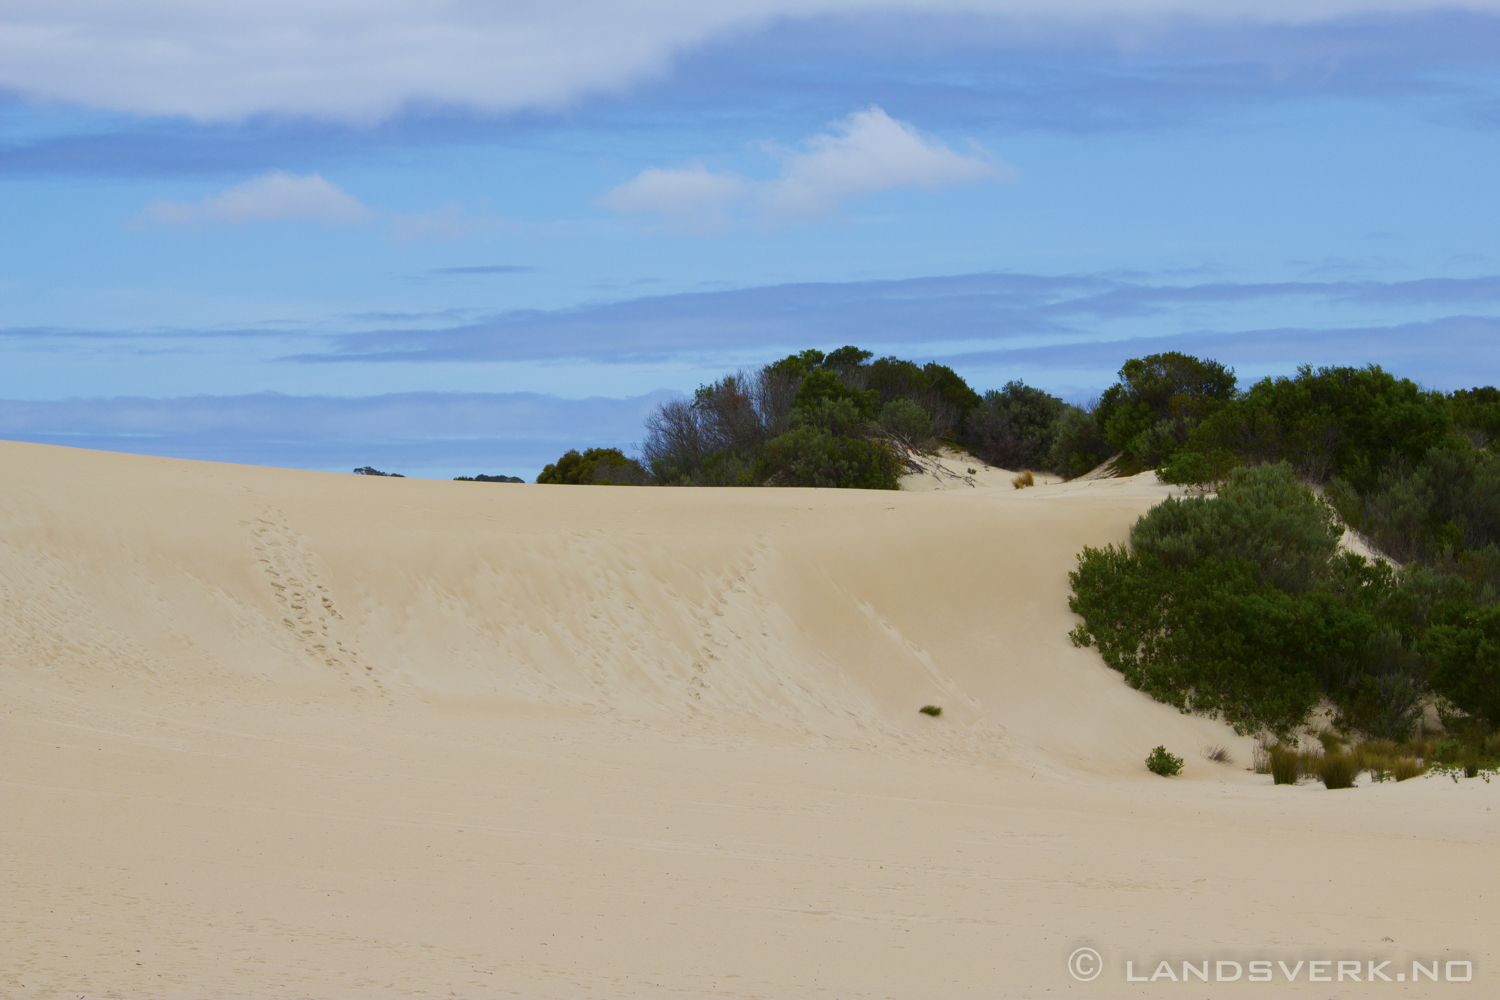 Little Sahara, Kangaroo Island. 

(Canon EOS 550D / Sigma 70-200mm F2.8 OS)